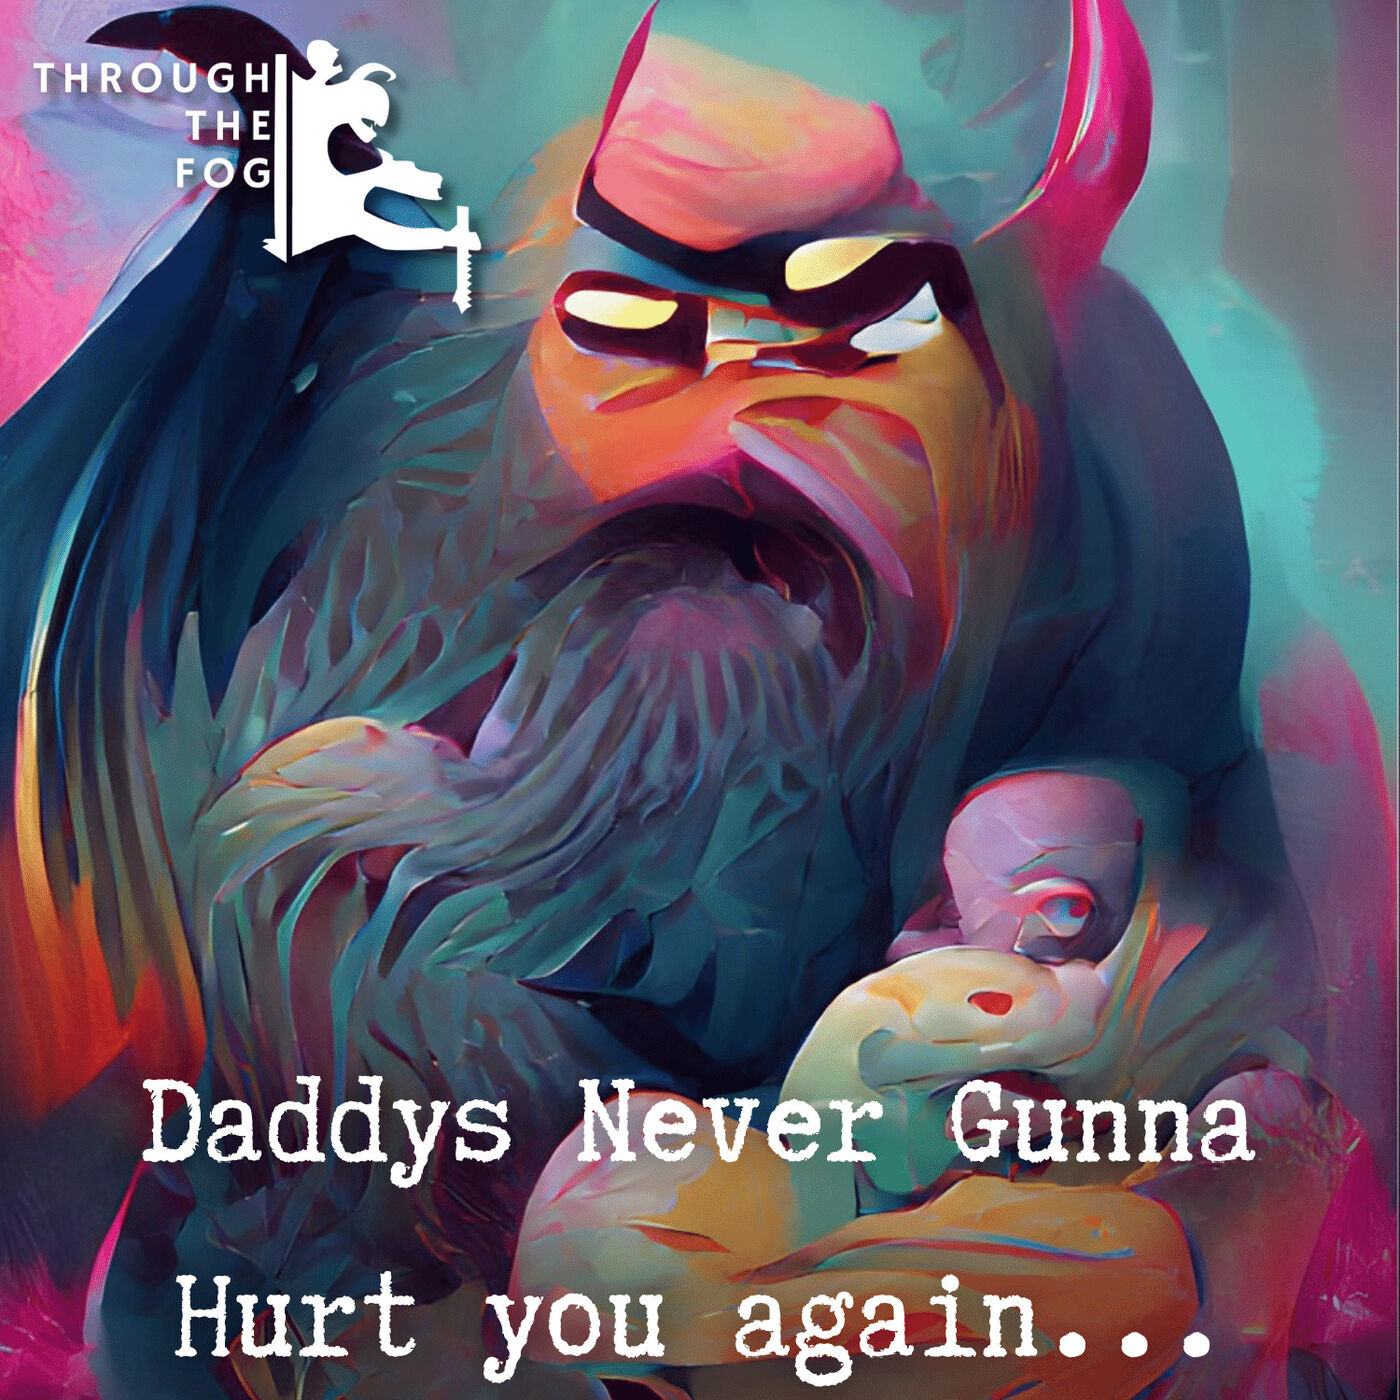 Daddys Never Gunna Hurt you again